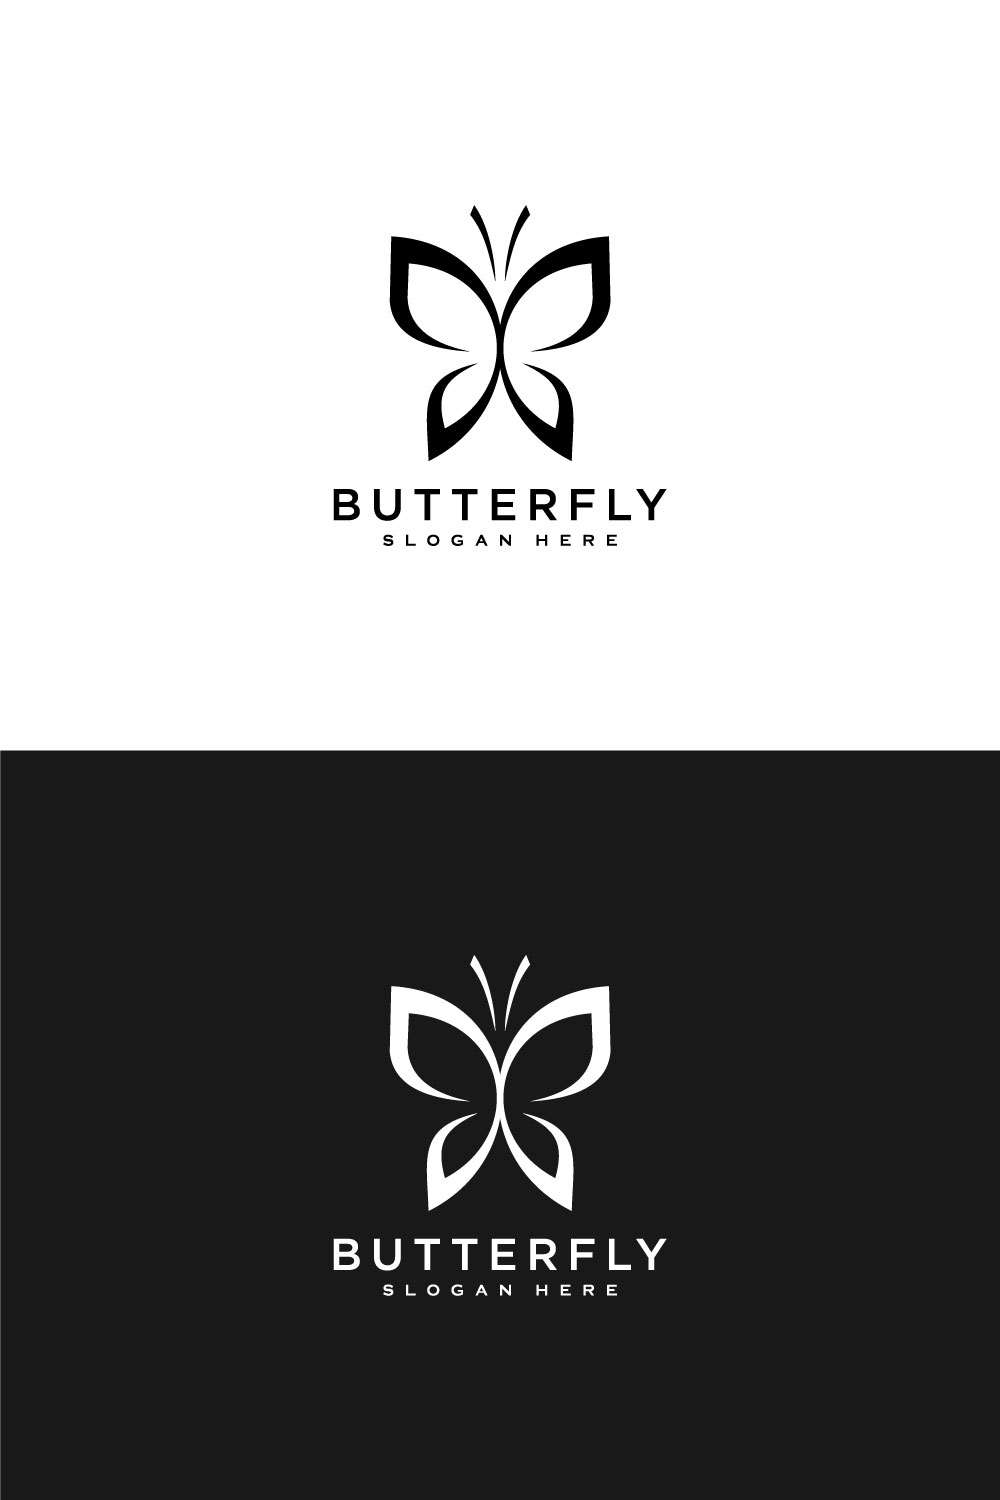 Butterfly Animal Logo Design Vector Template pinterest image.